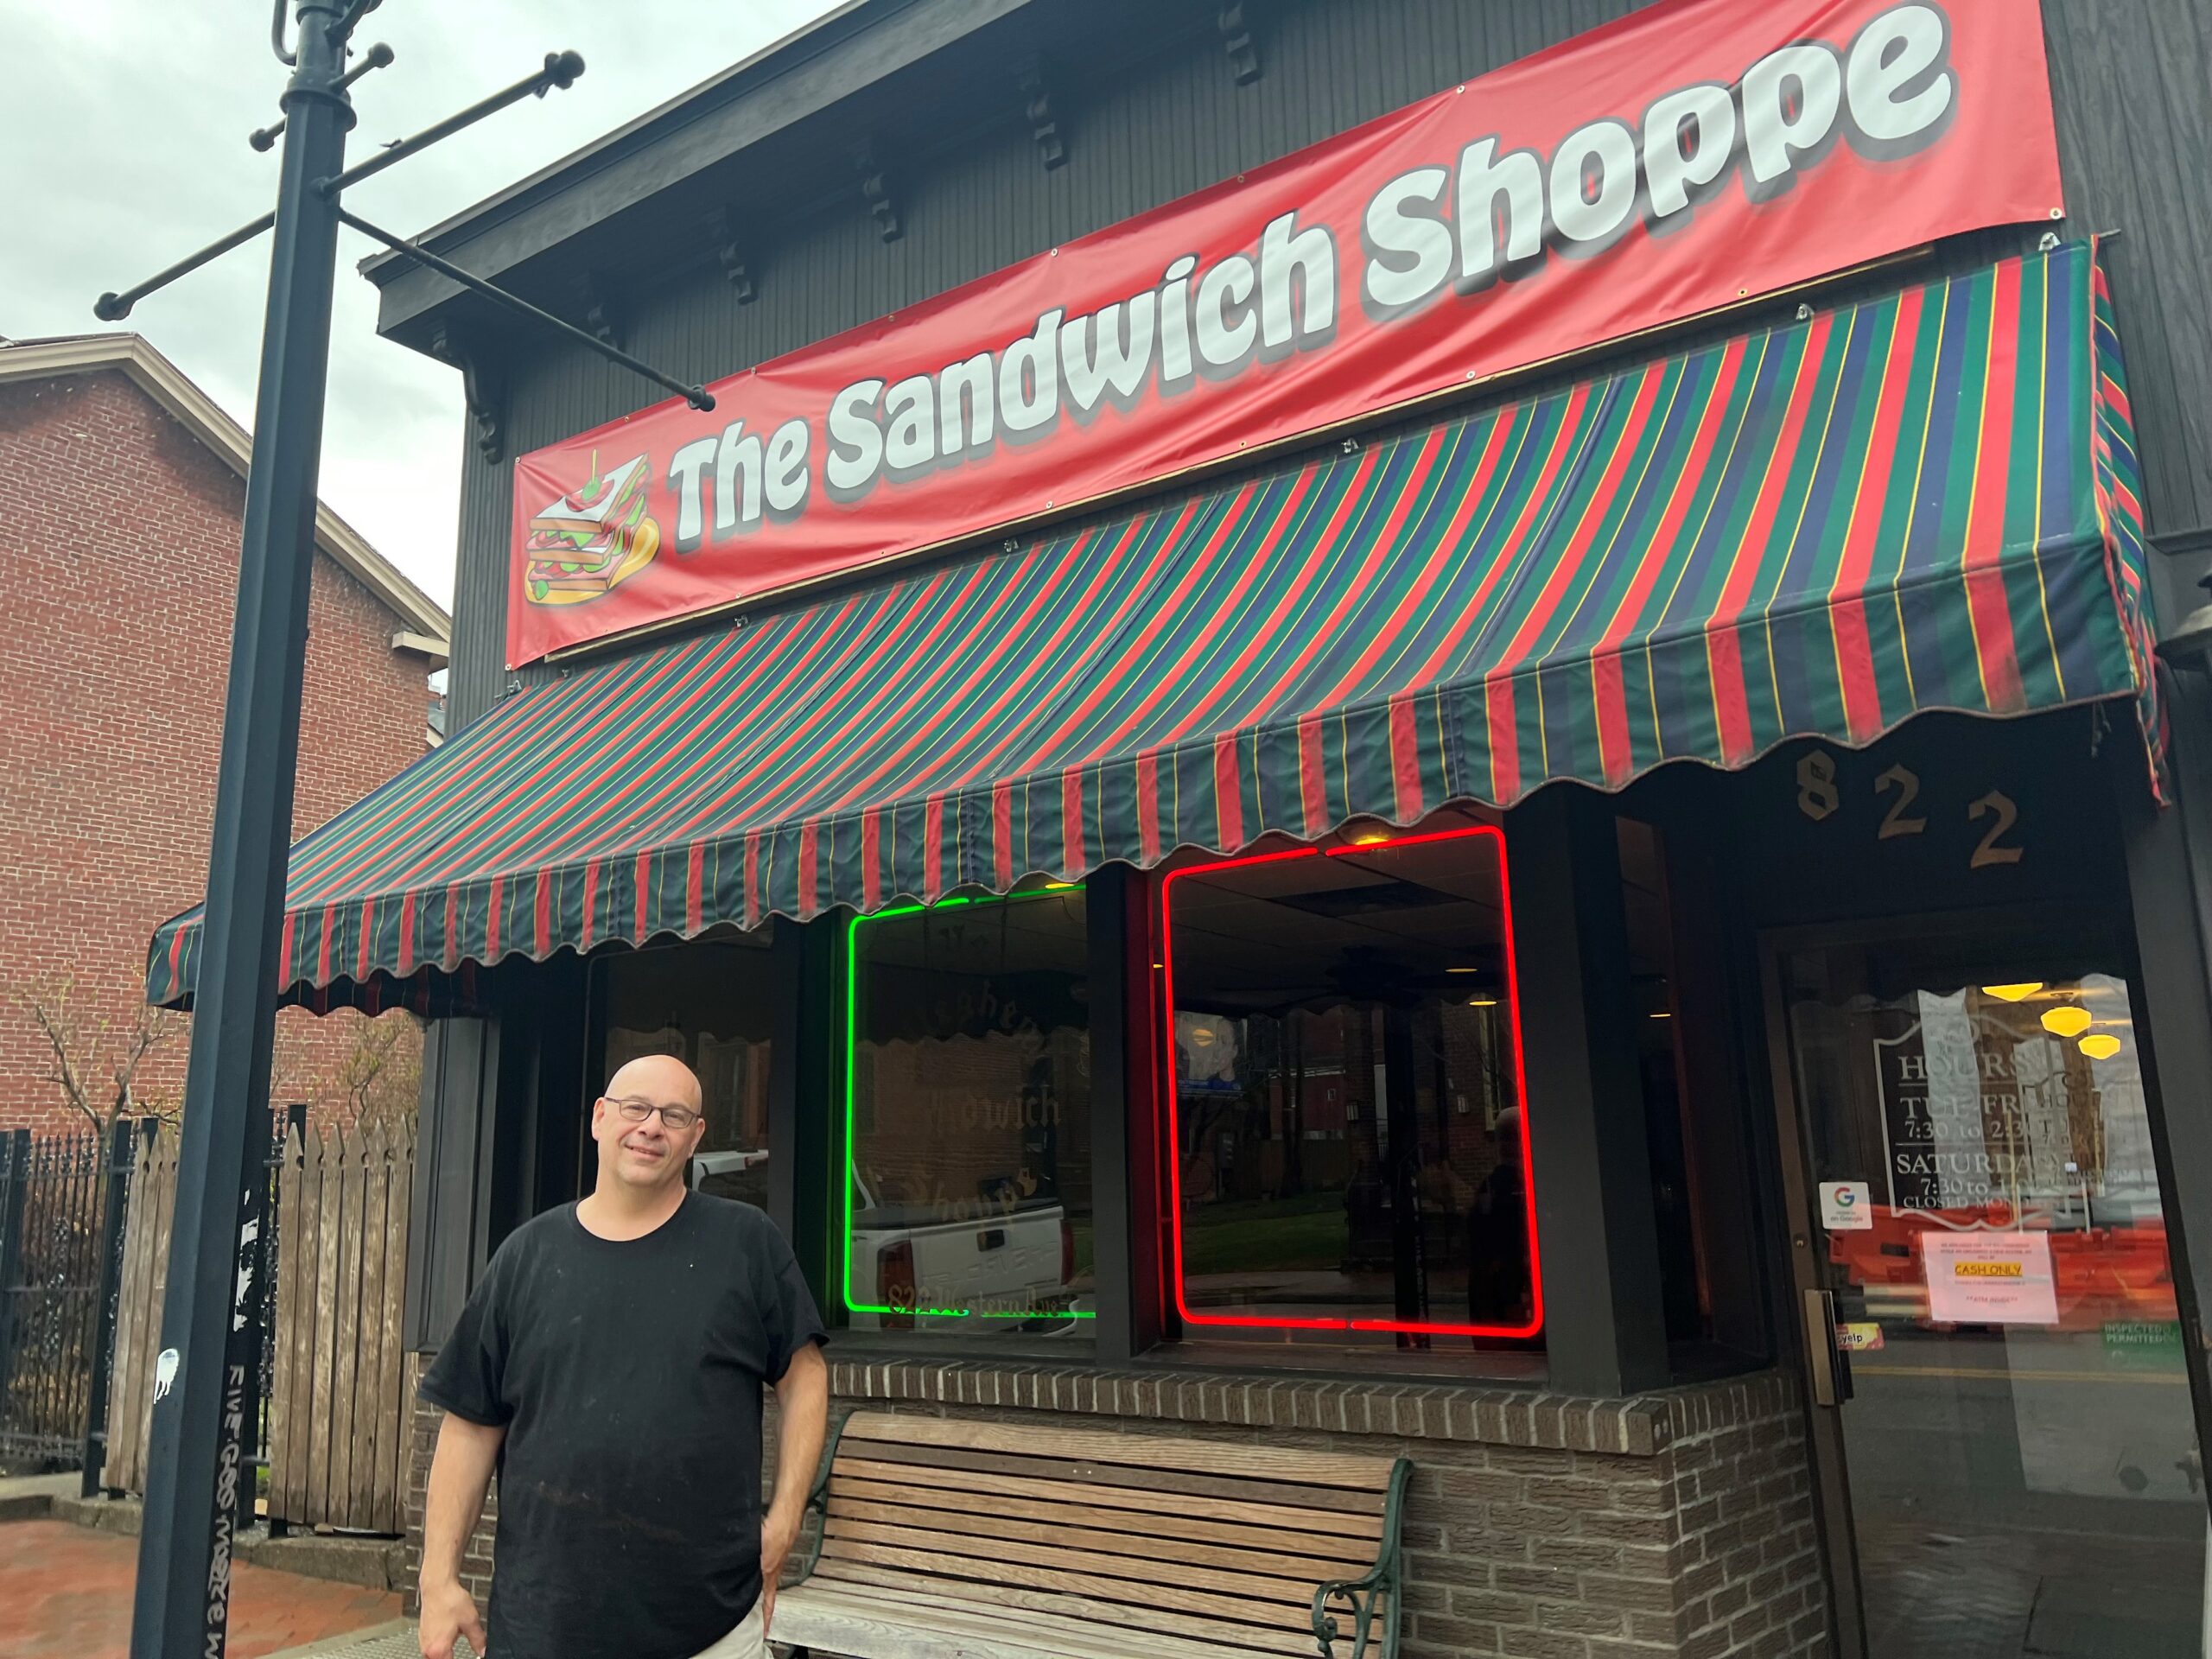 The Sandwich Shoppe